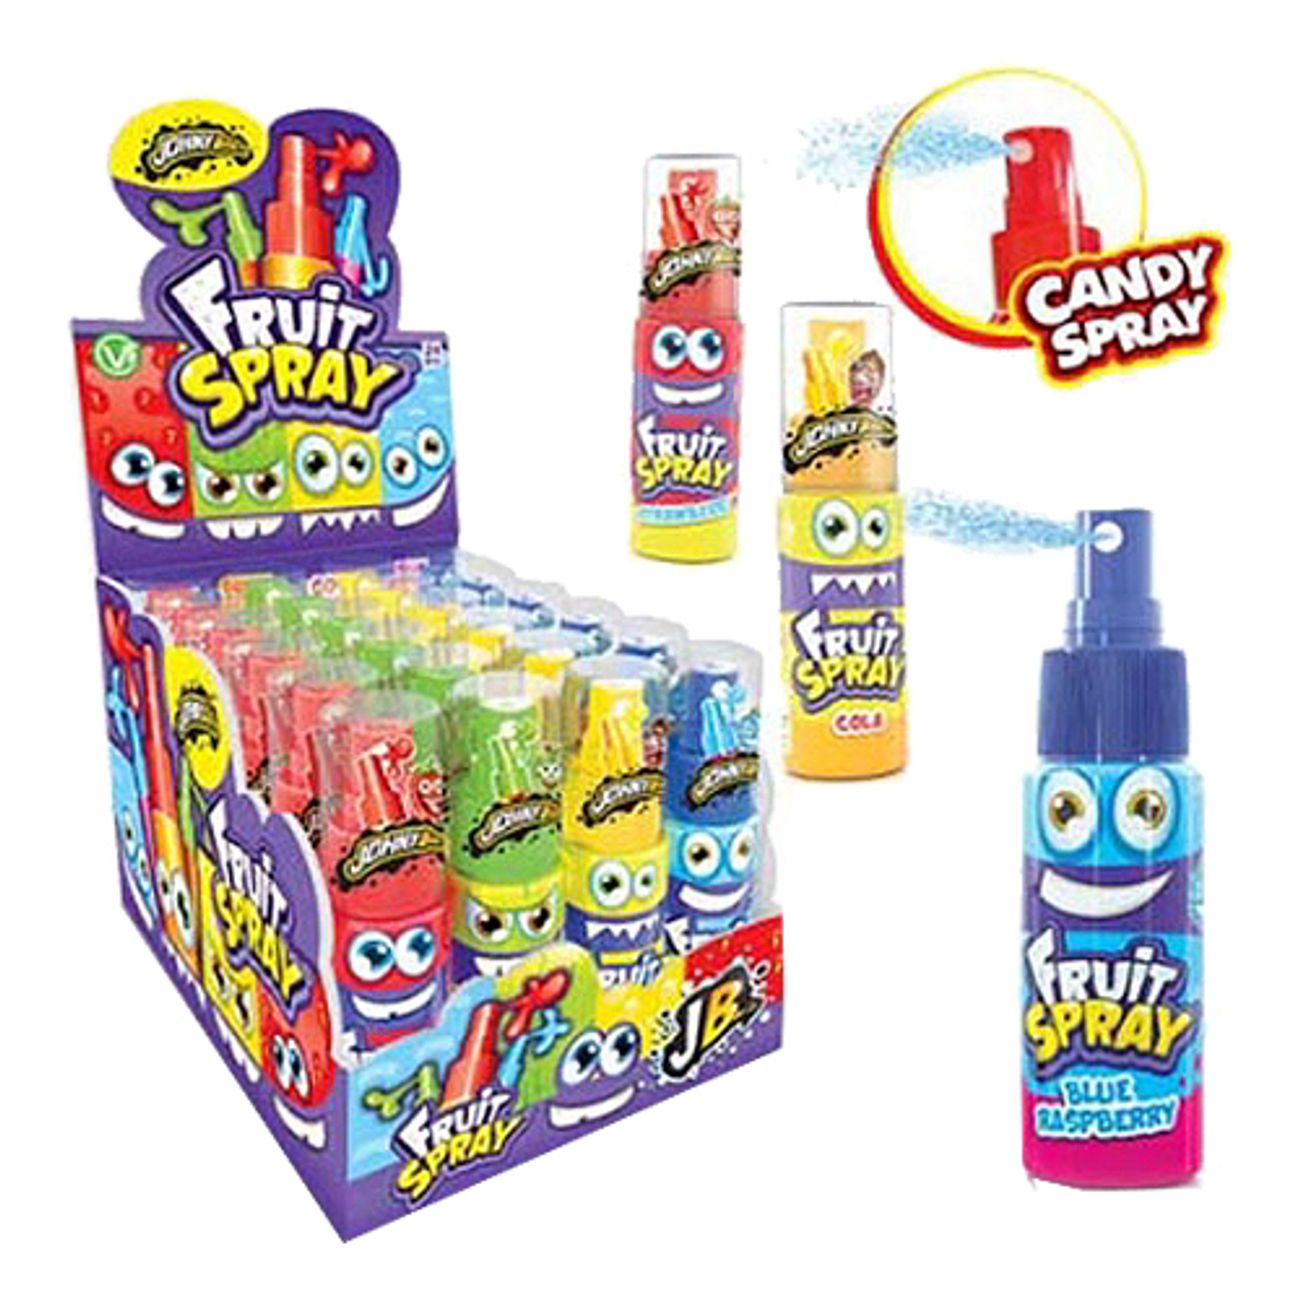 candy-spray-godis-74741-1